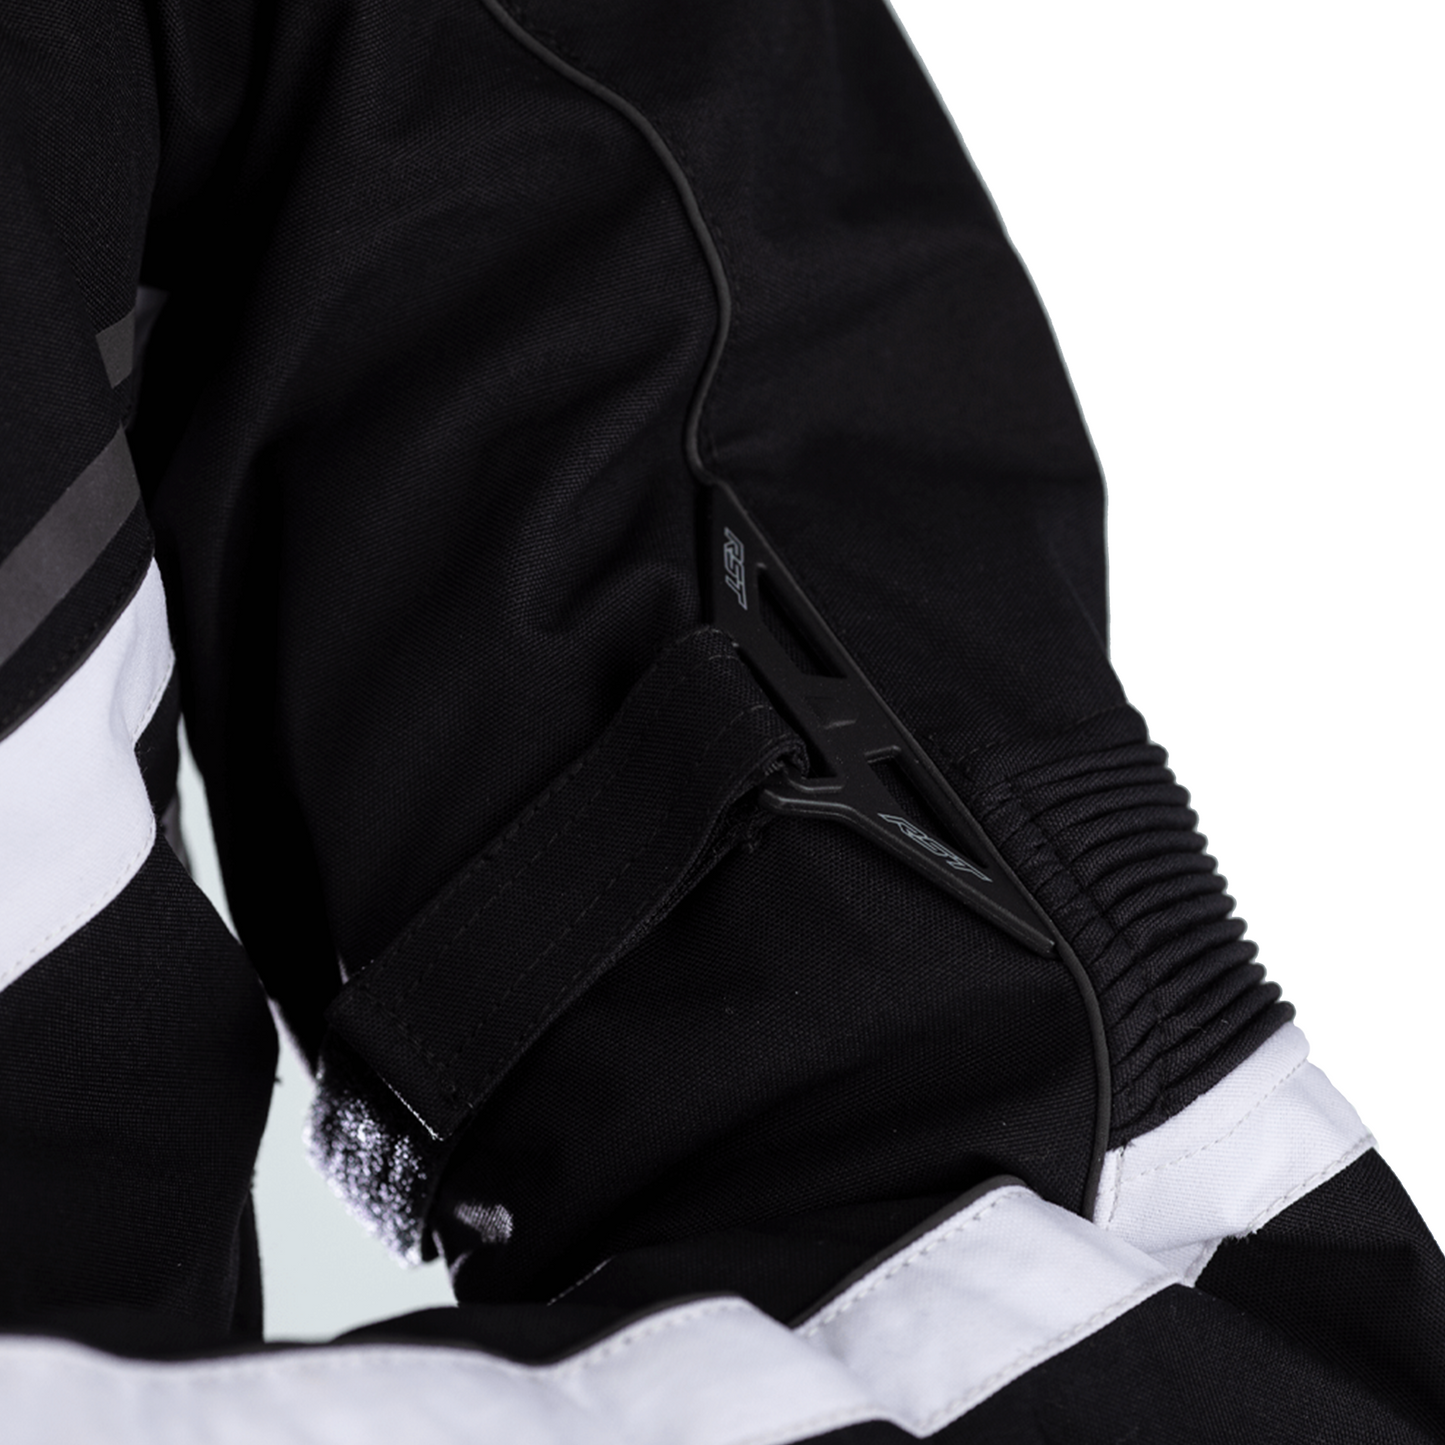 RST Sabre Textile Jacket - White (2556)